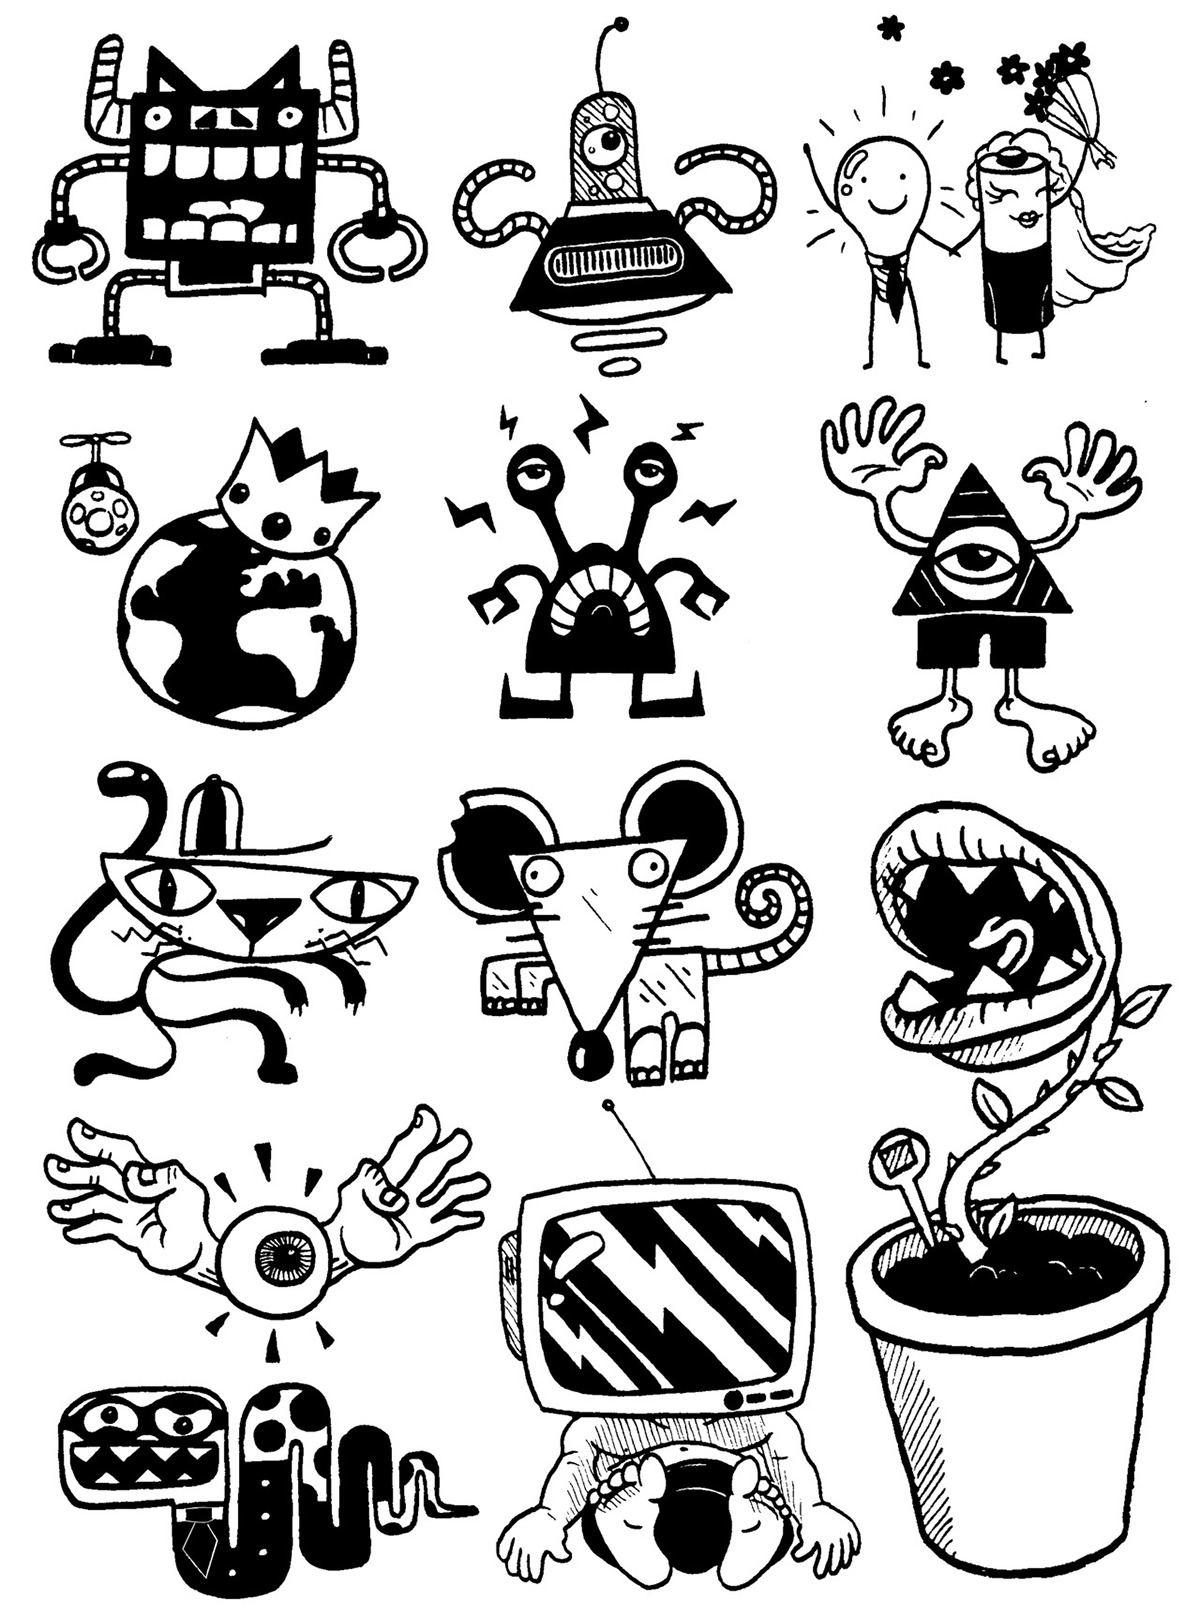 doodles illustrations characters comic